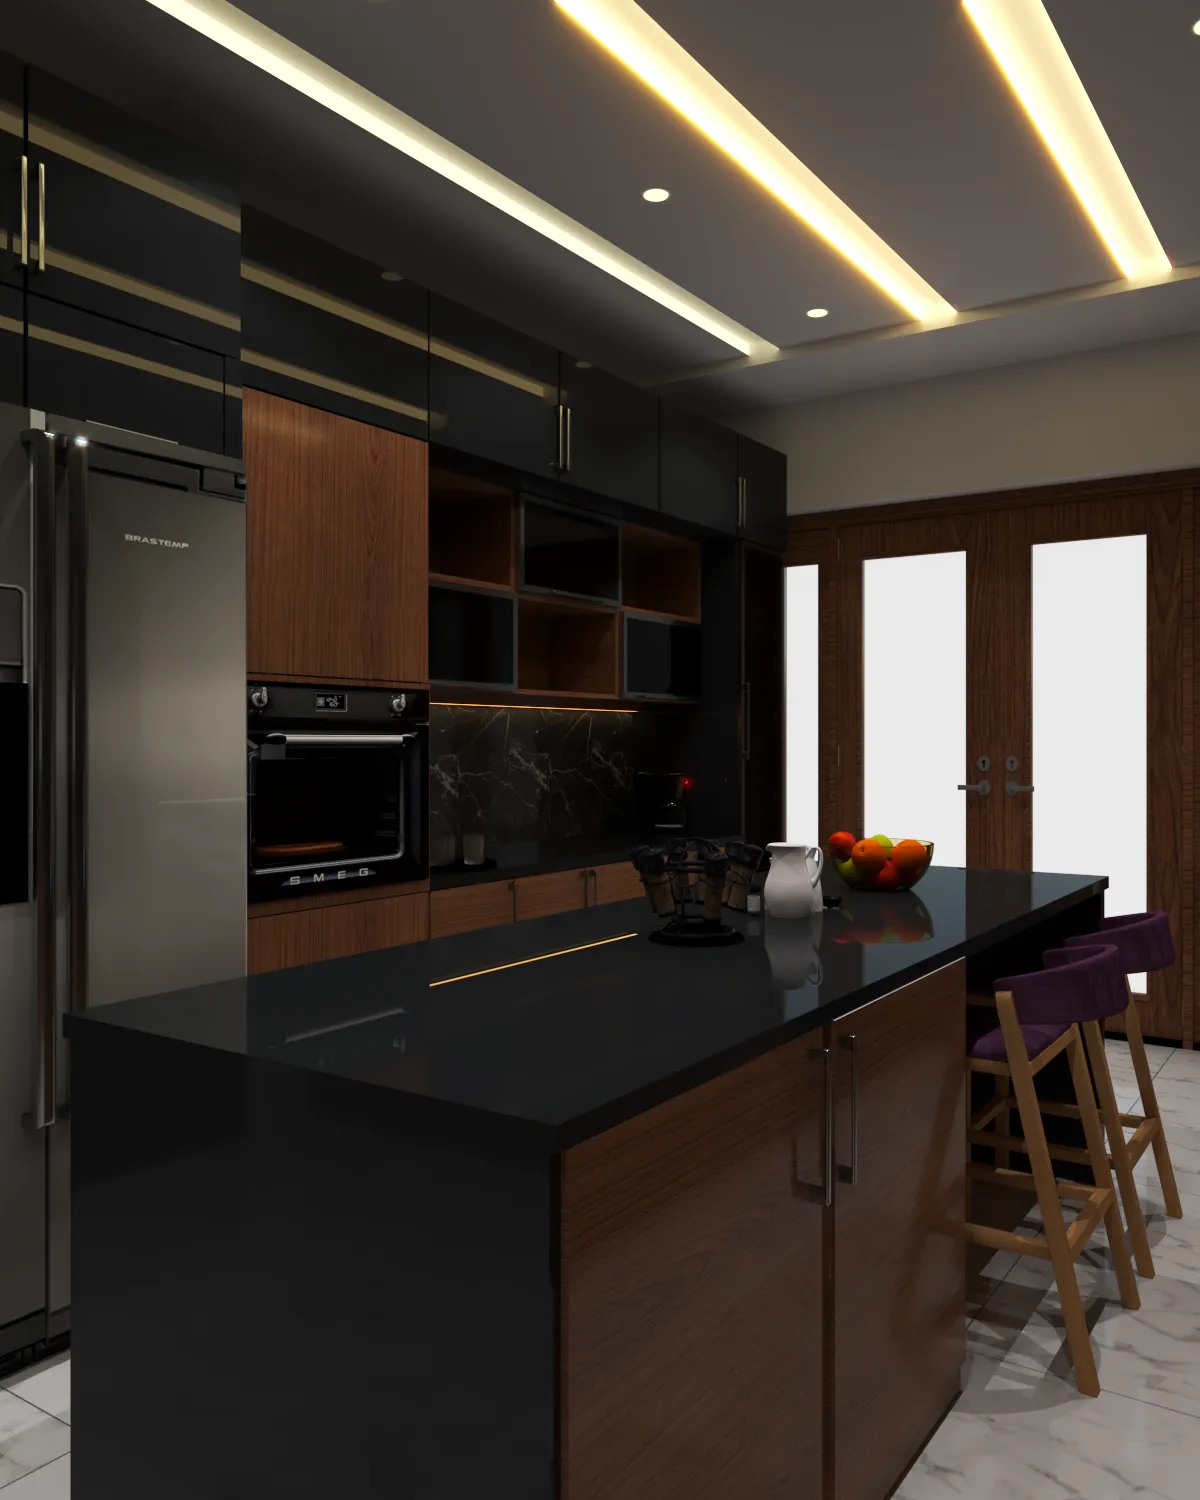 kitchen - new_Scene 4.effectsResult